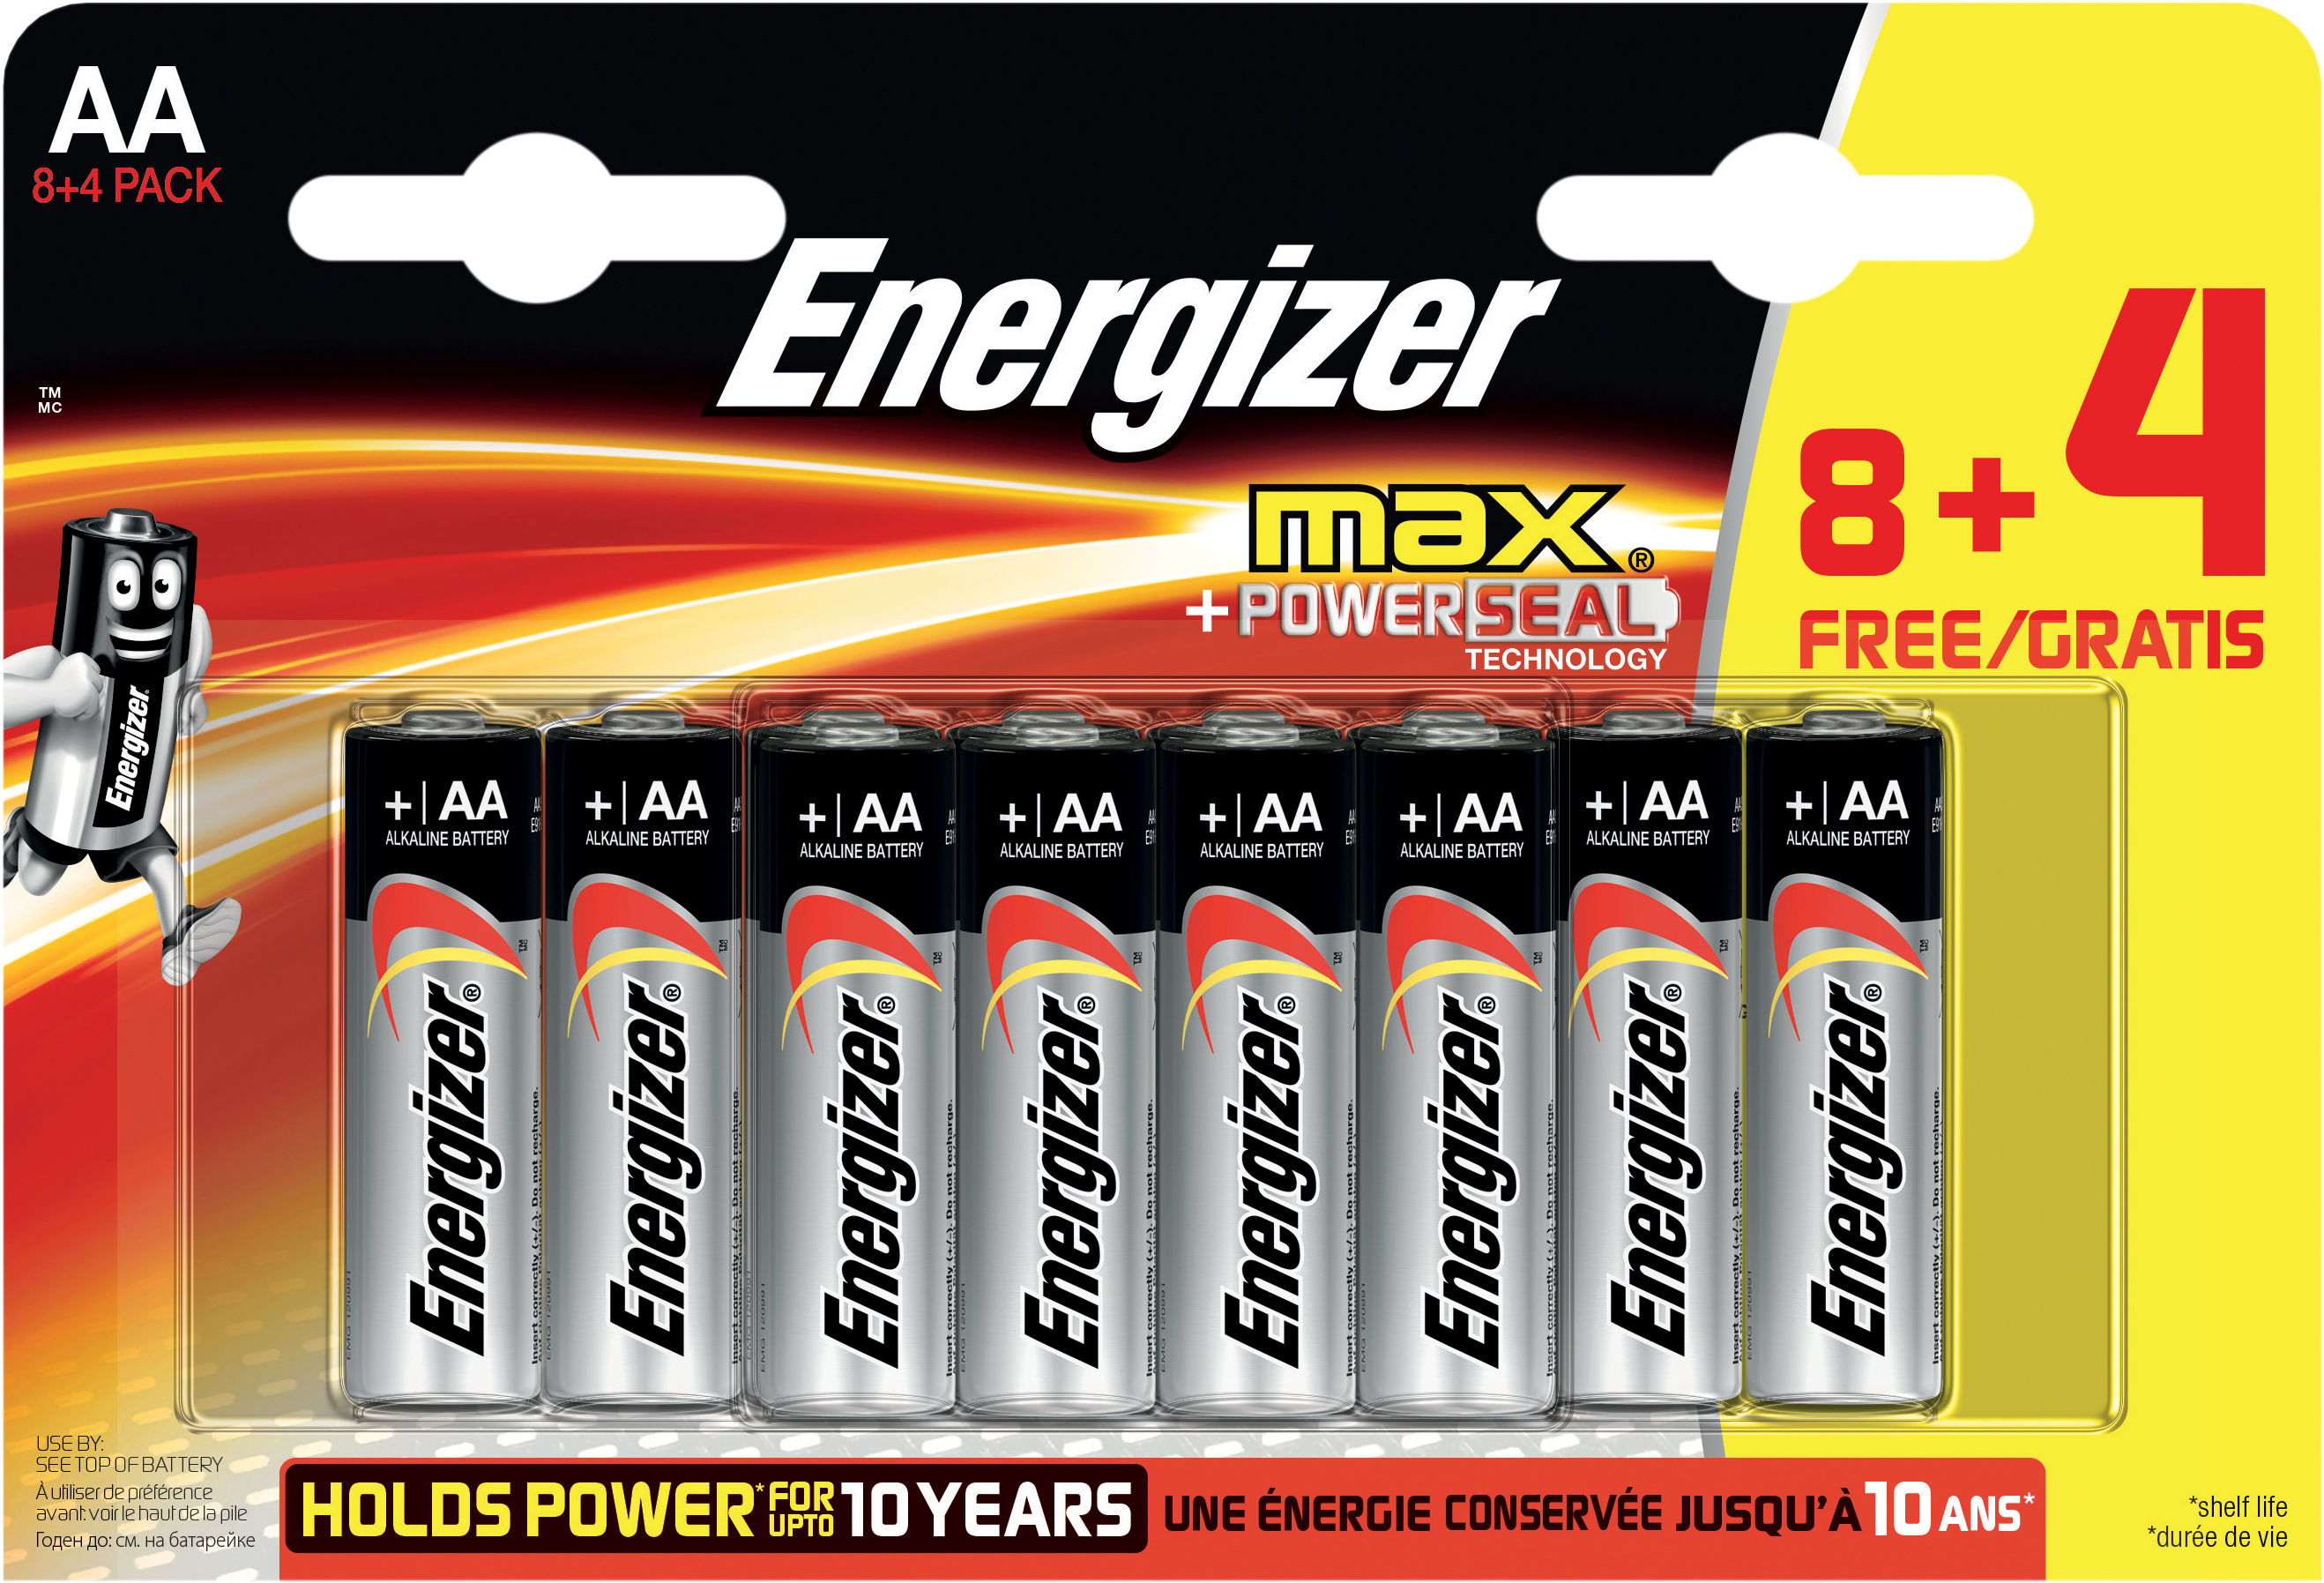 Energizer MAXE91/ AA PK8 + 4 Free